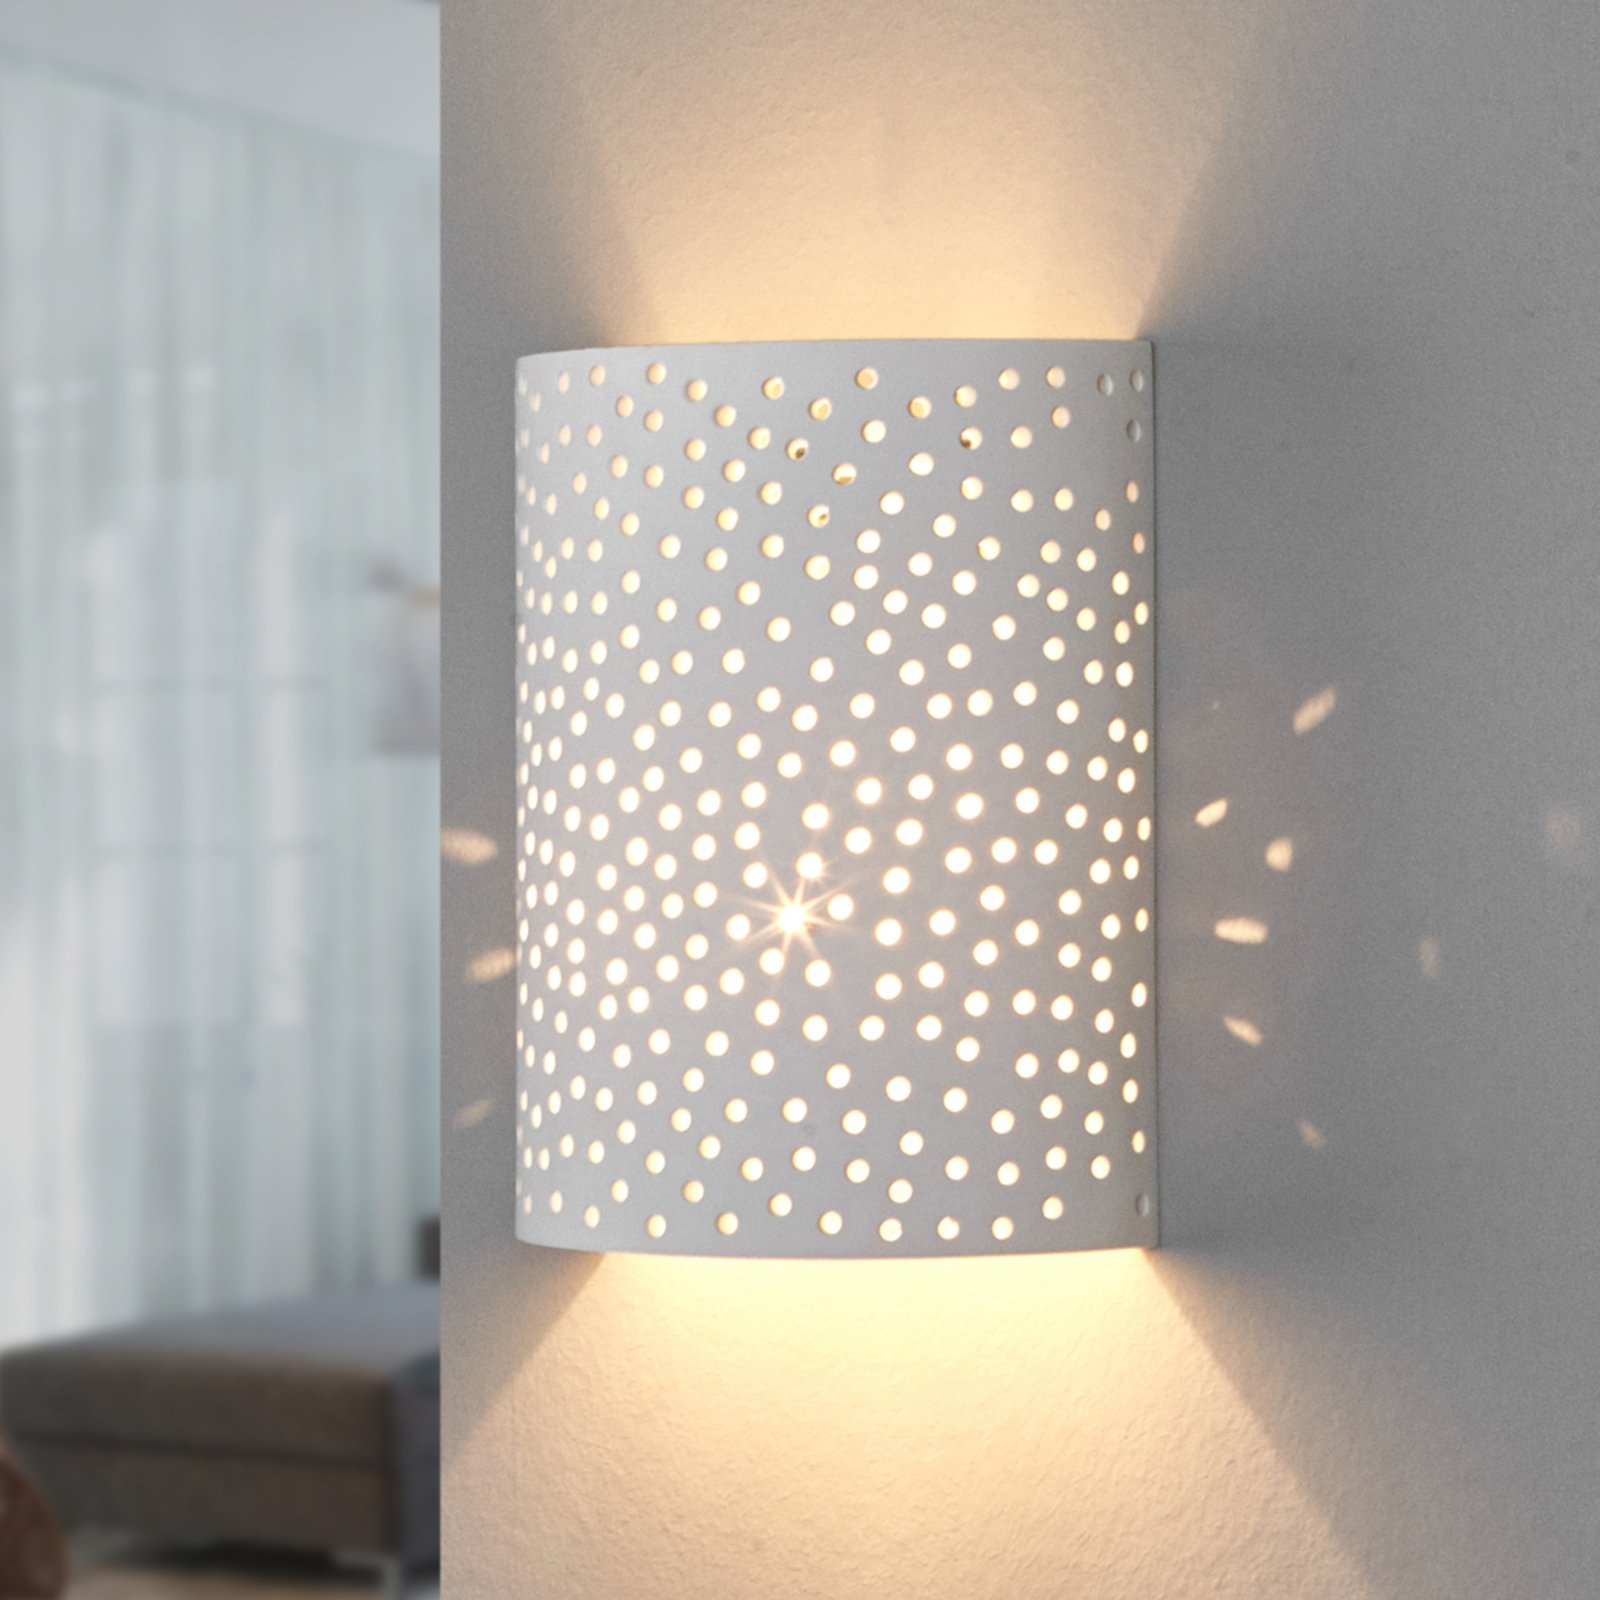 Jiru plaster wall lamp with pretty perforation